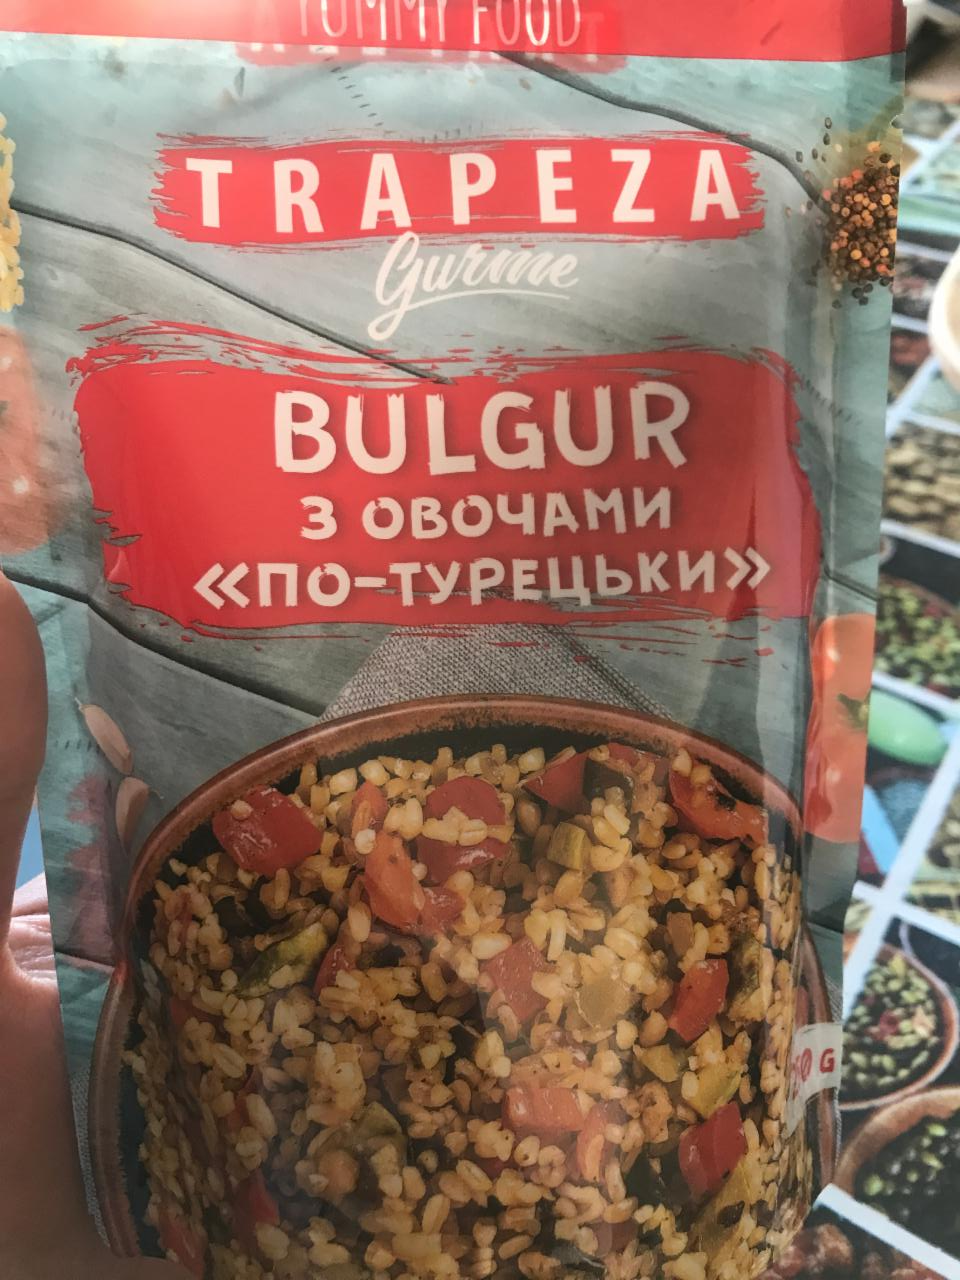 Фото - Булгур с овощами По-турецки Trapeza